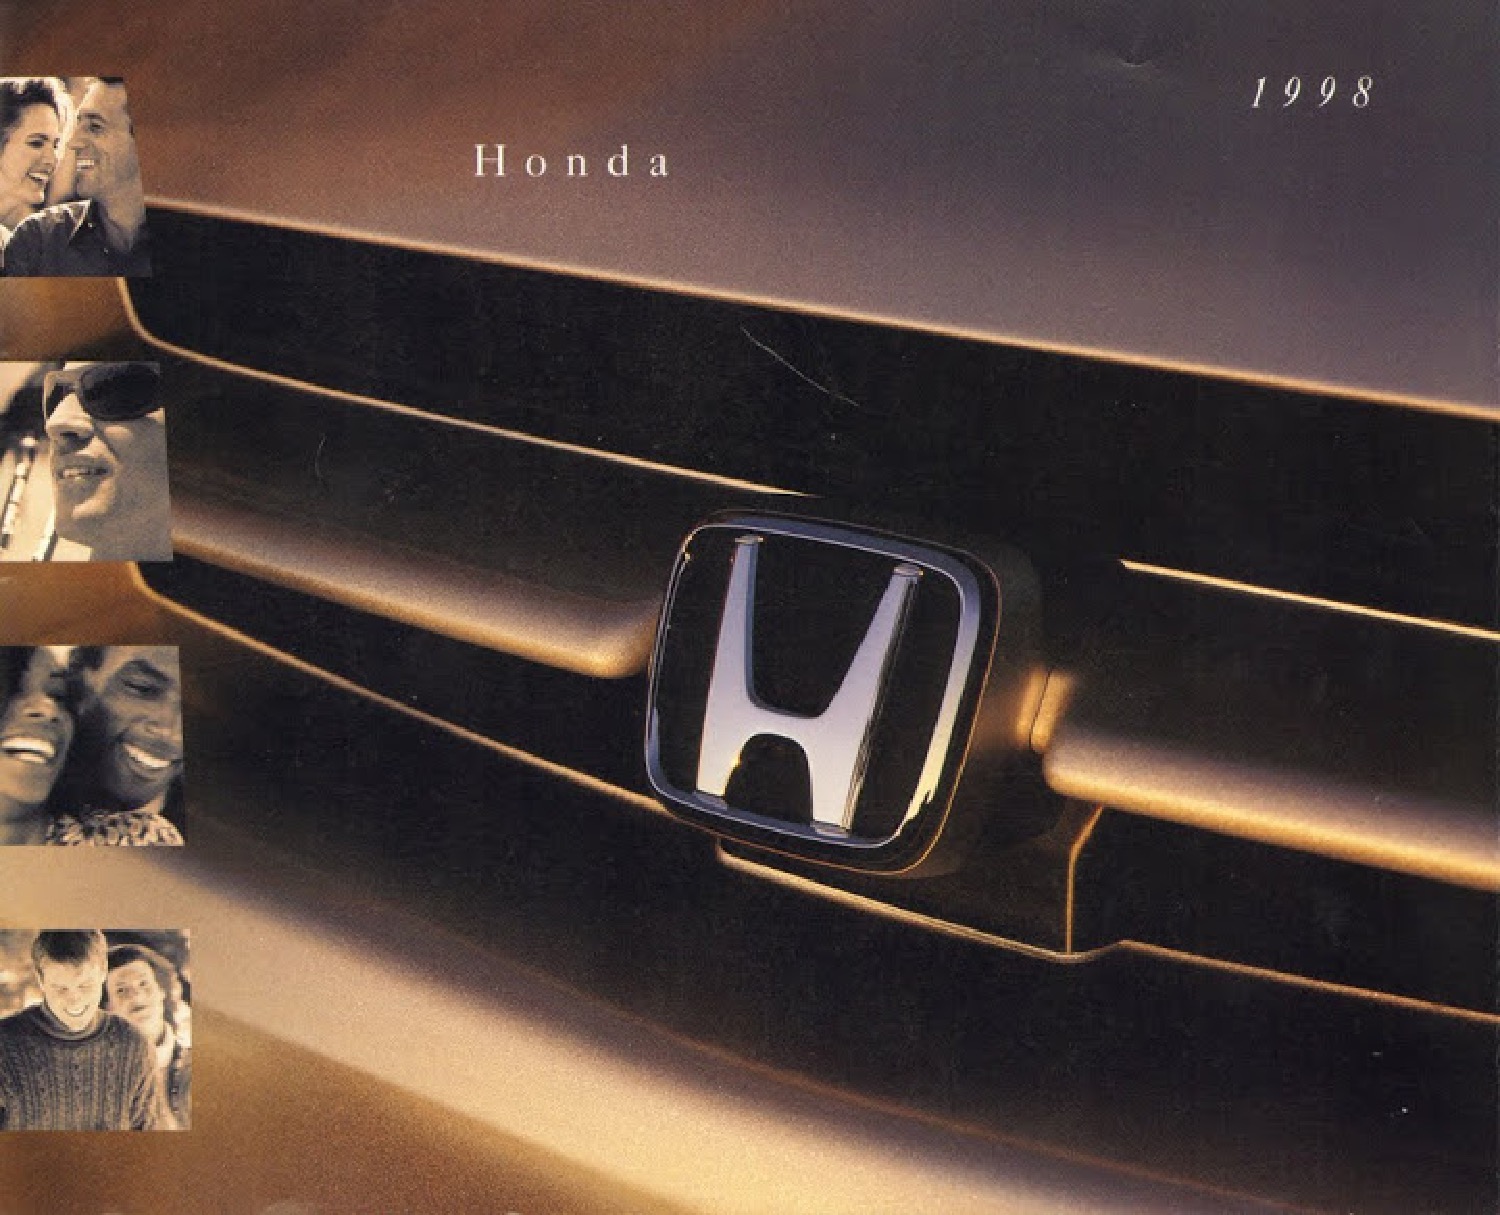 1998 Honda Model Range Brochure